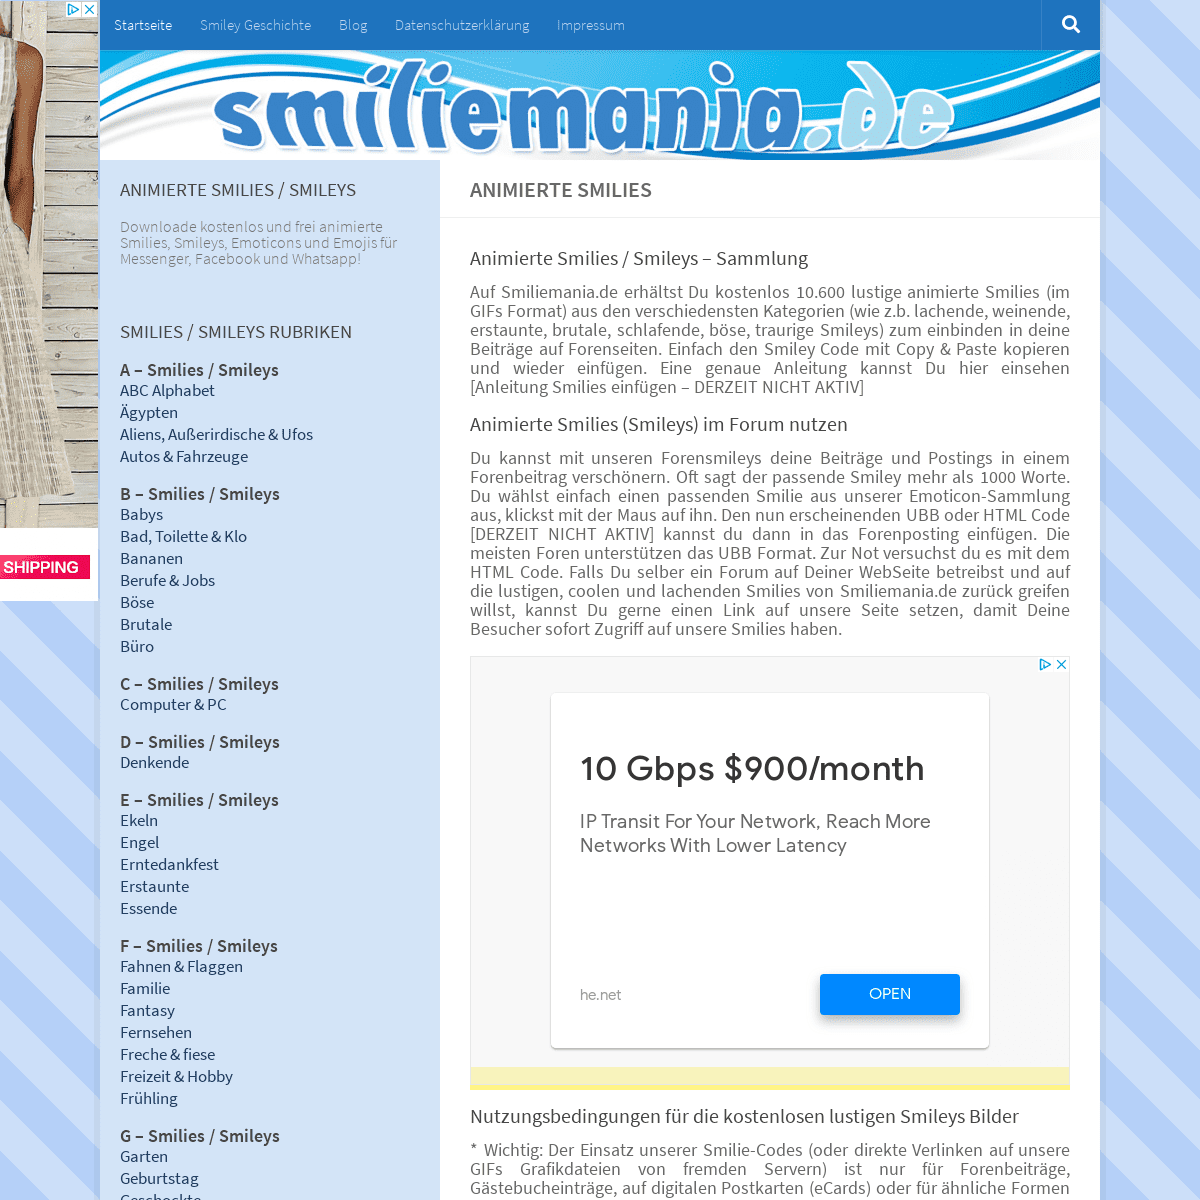 A complete backup of https://smiliemania.de